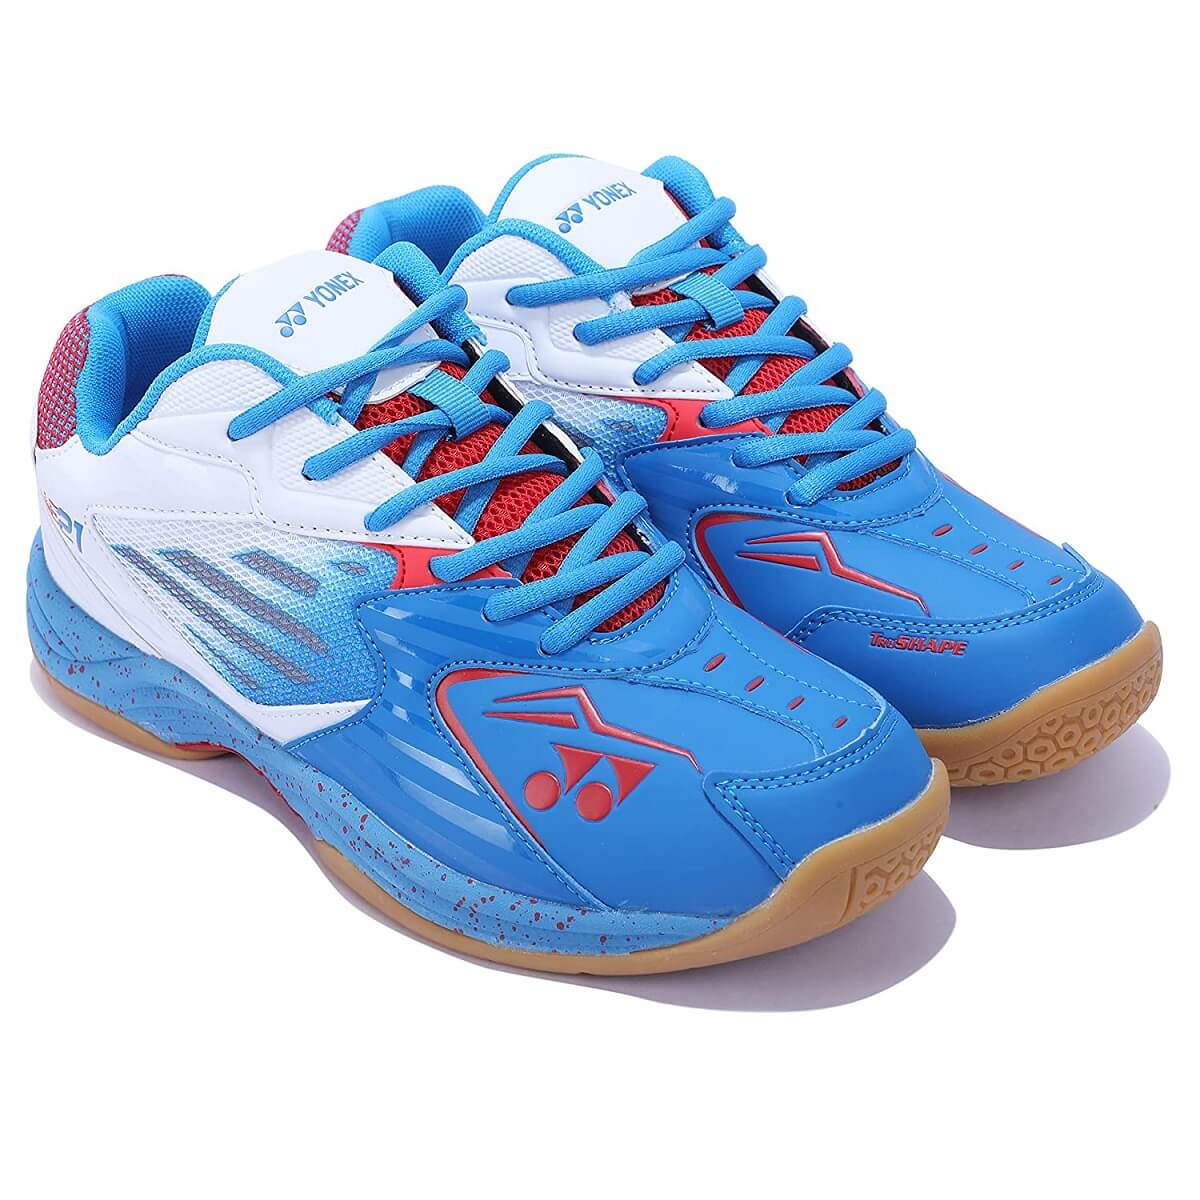 Yonex All England 21 Badminton Shoes (Pearlized Blue/Perlized White)